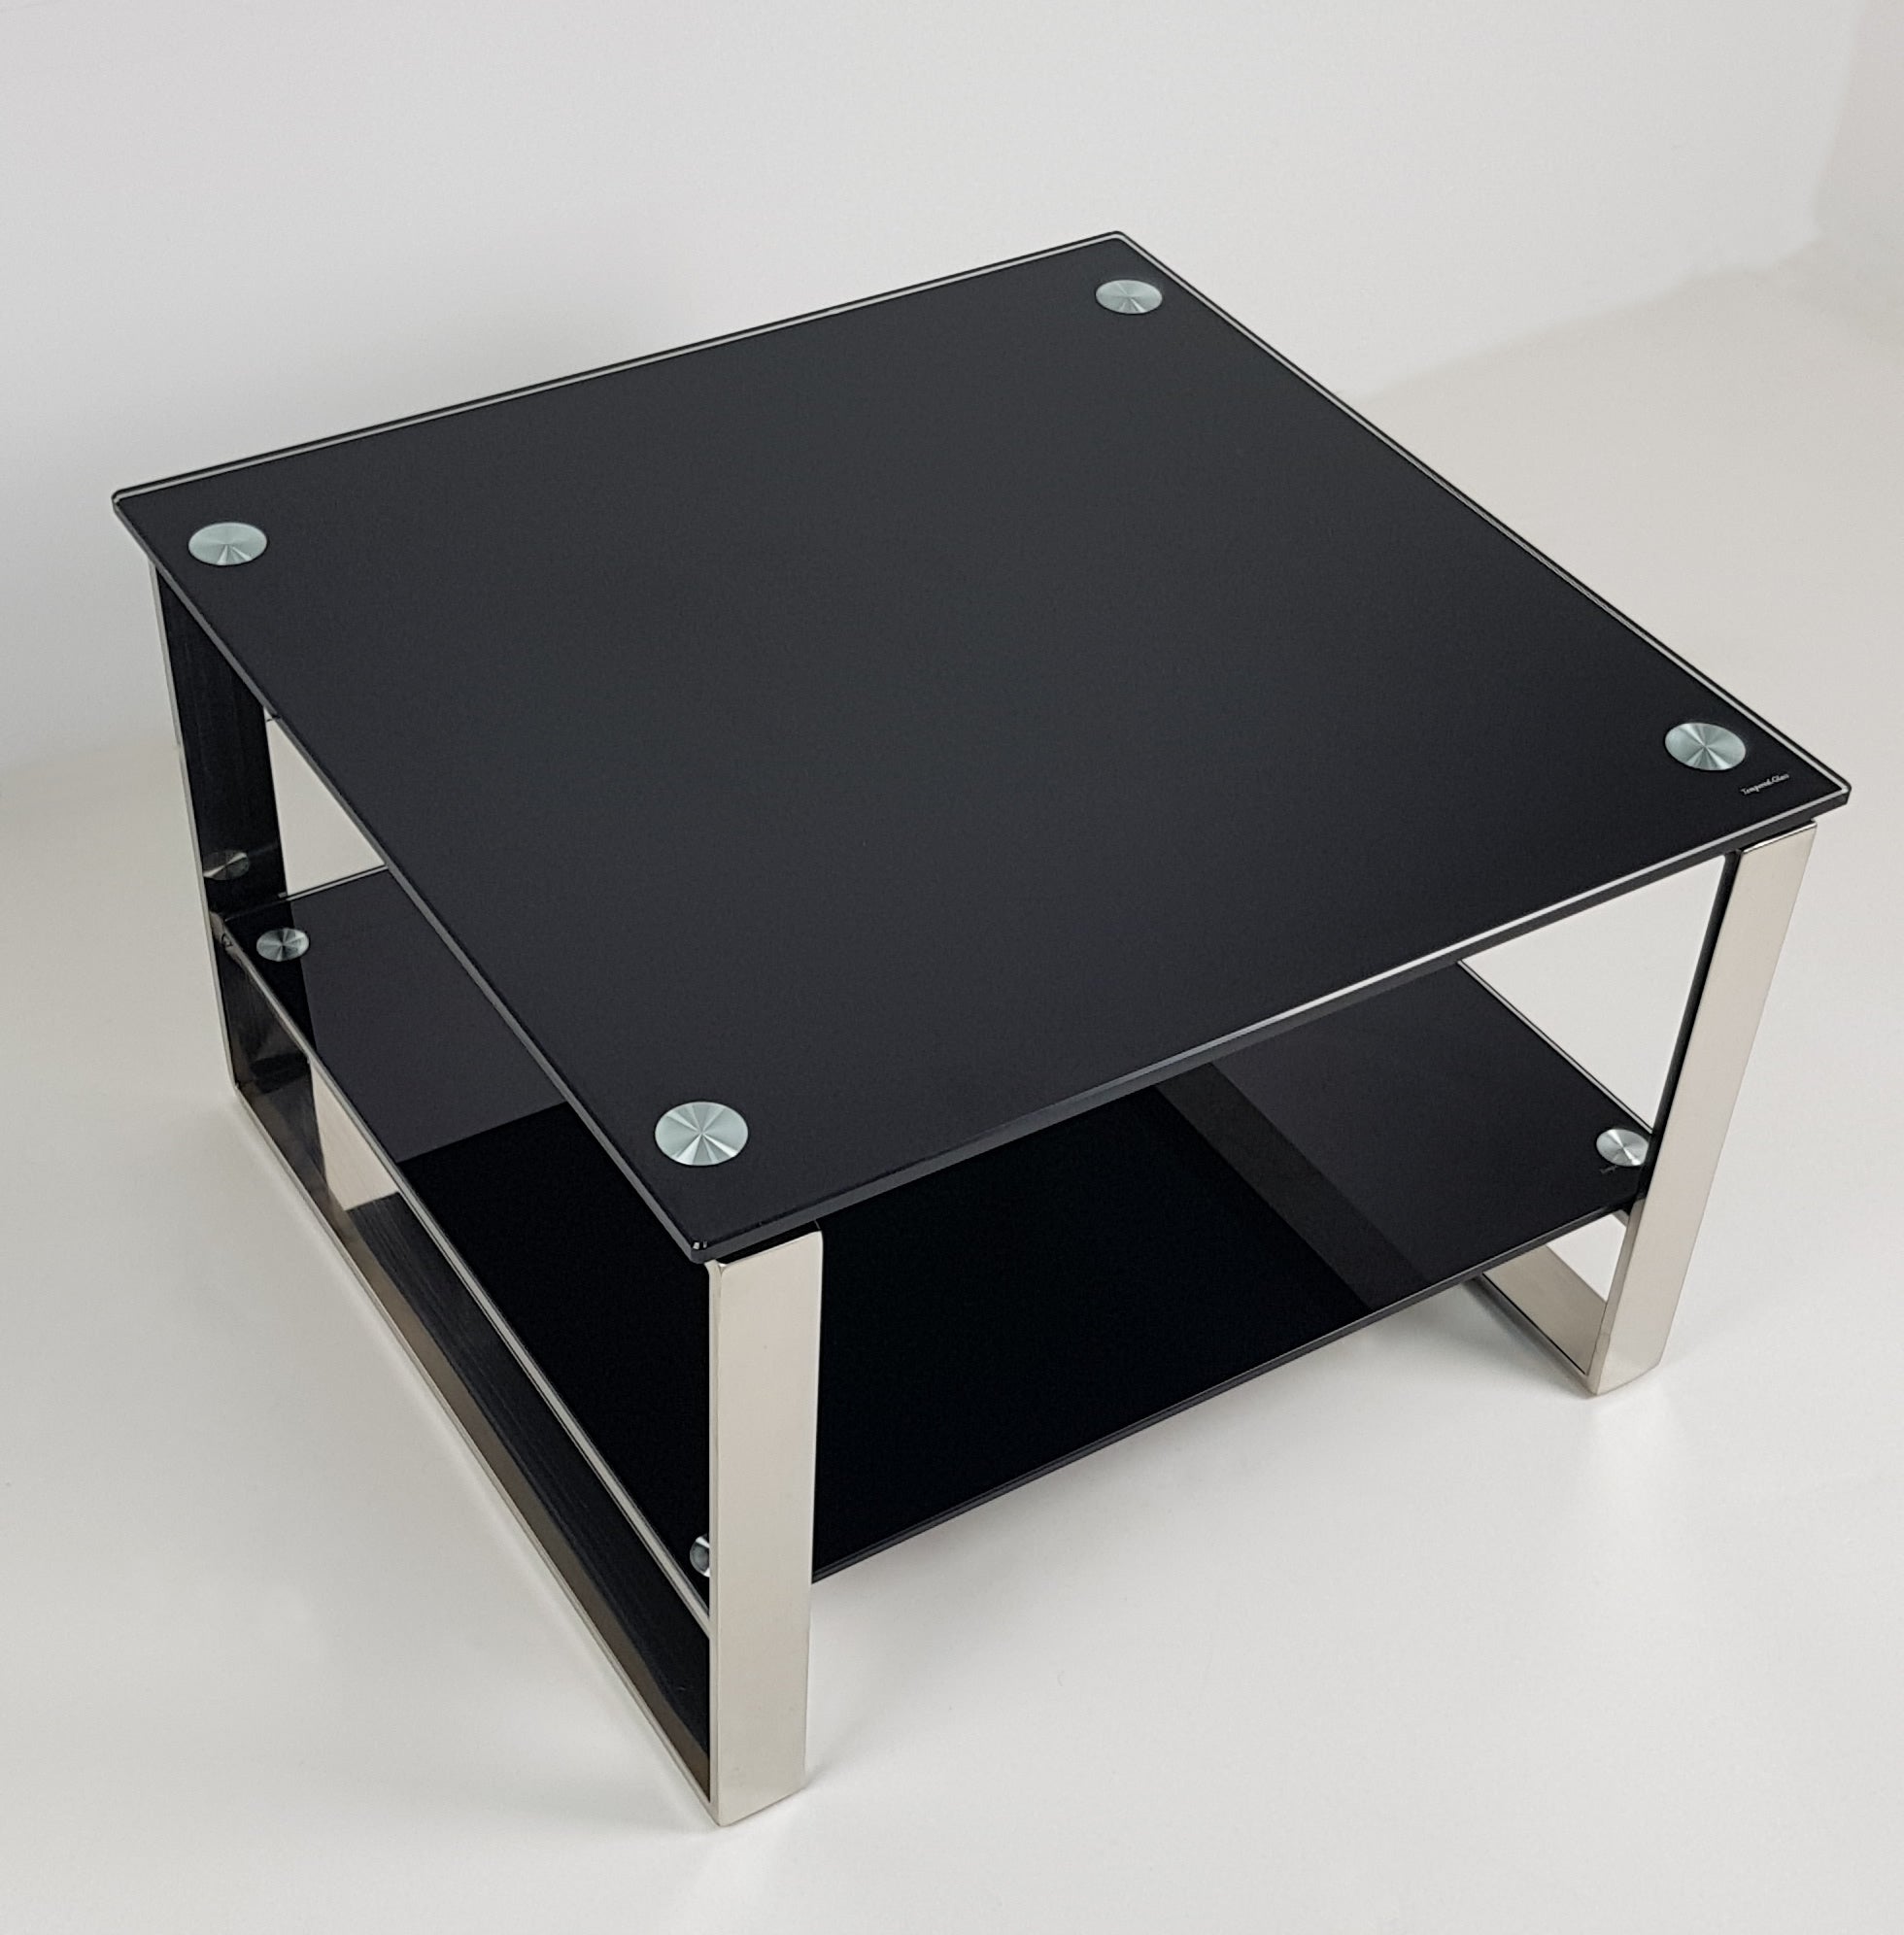 Double Shelf Black Glass Coffee Table - JDBLG-2 UK